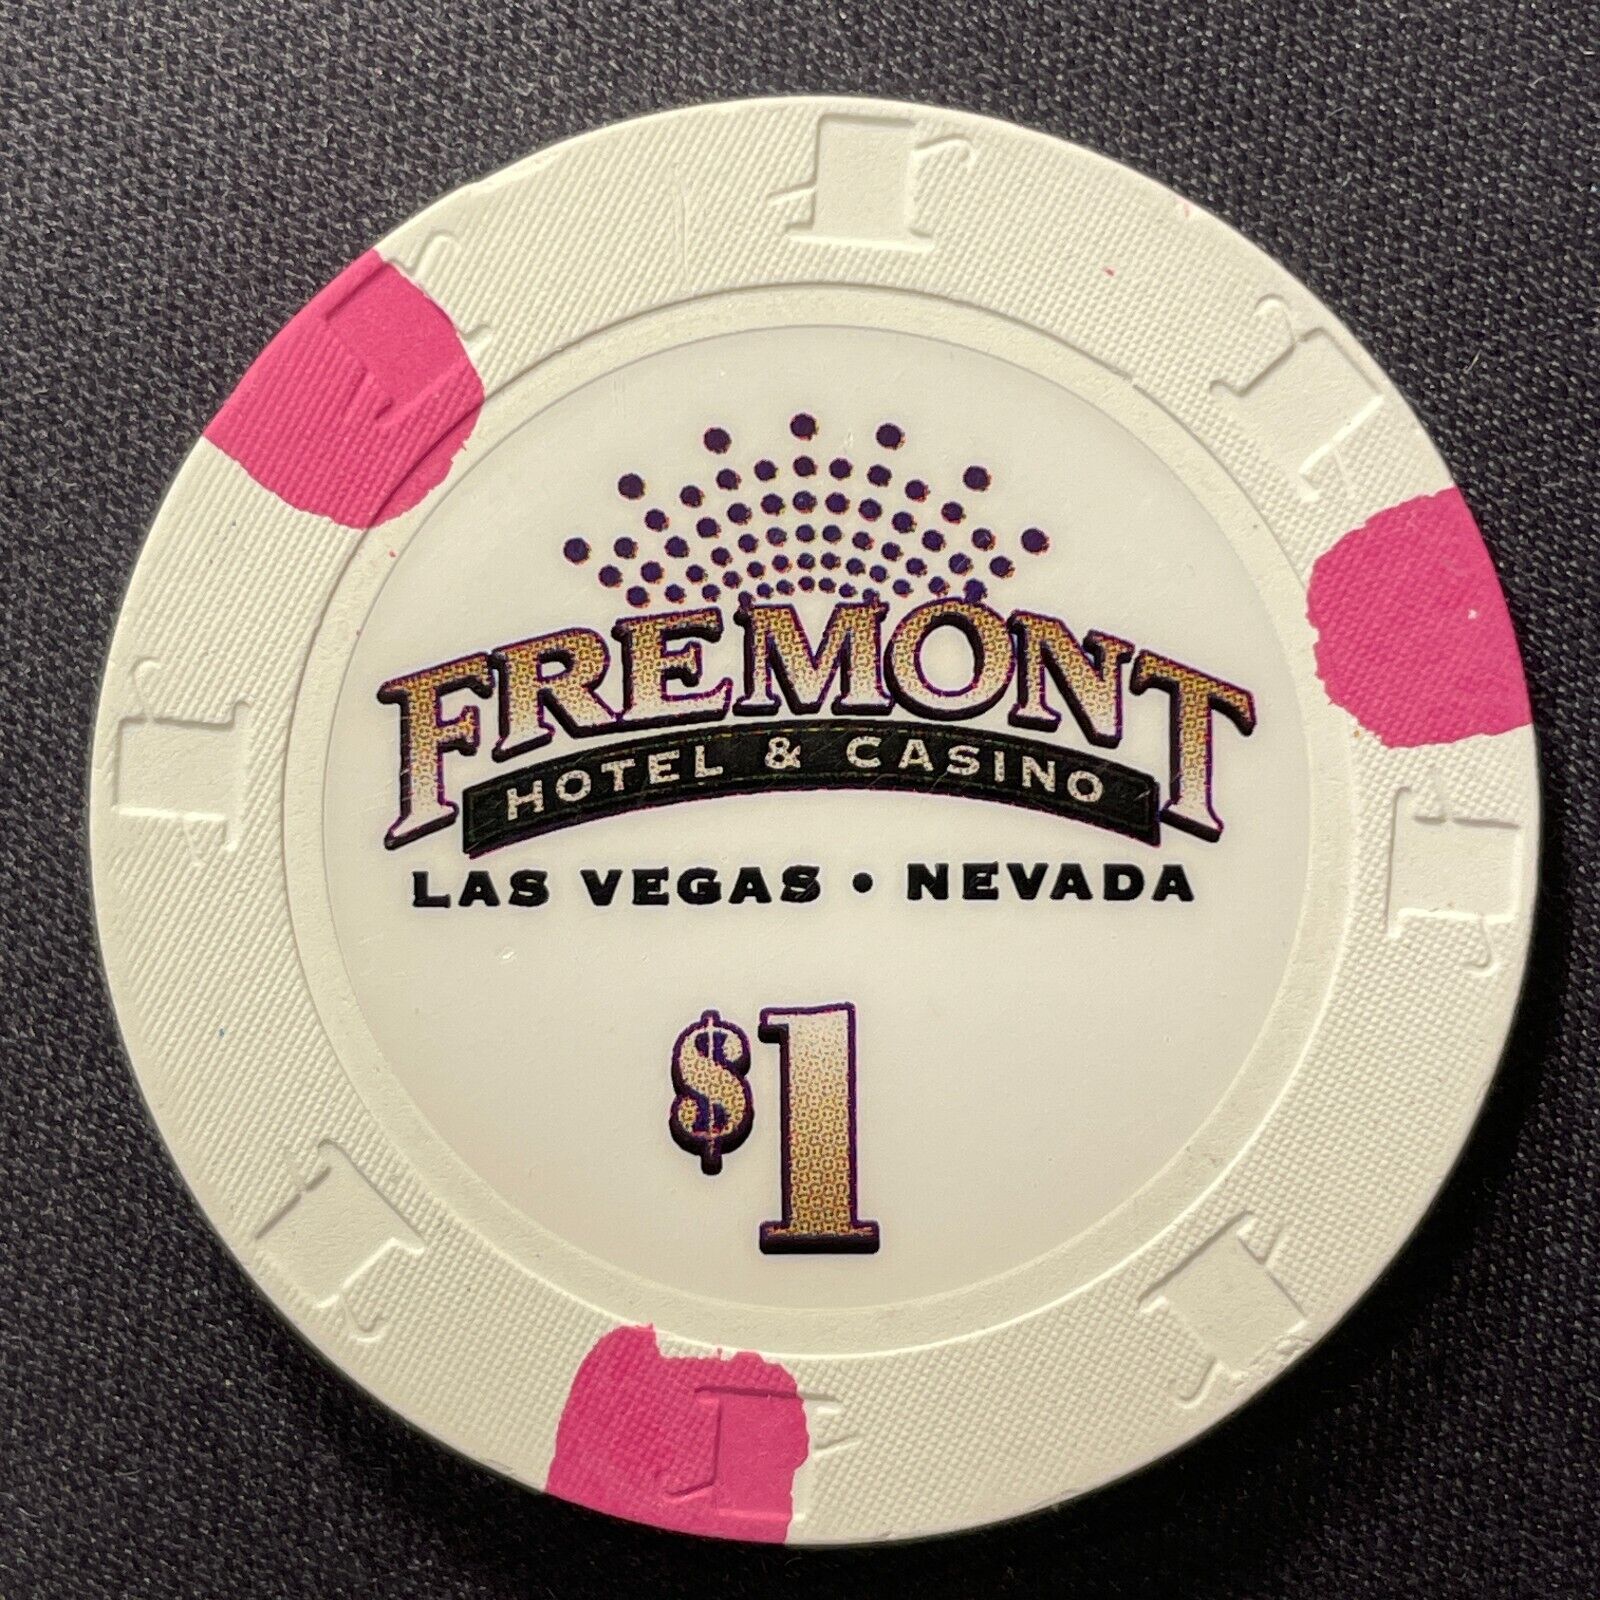 Fremont Las Vegas $1 casino chip house chip 2003 gaming token LV1